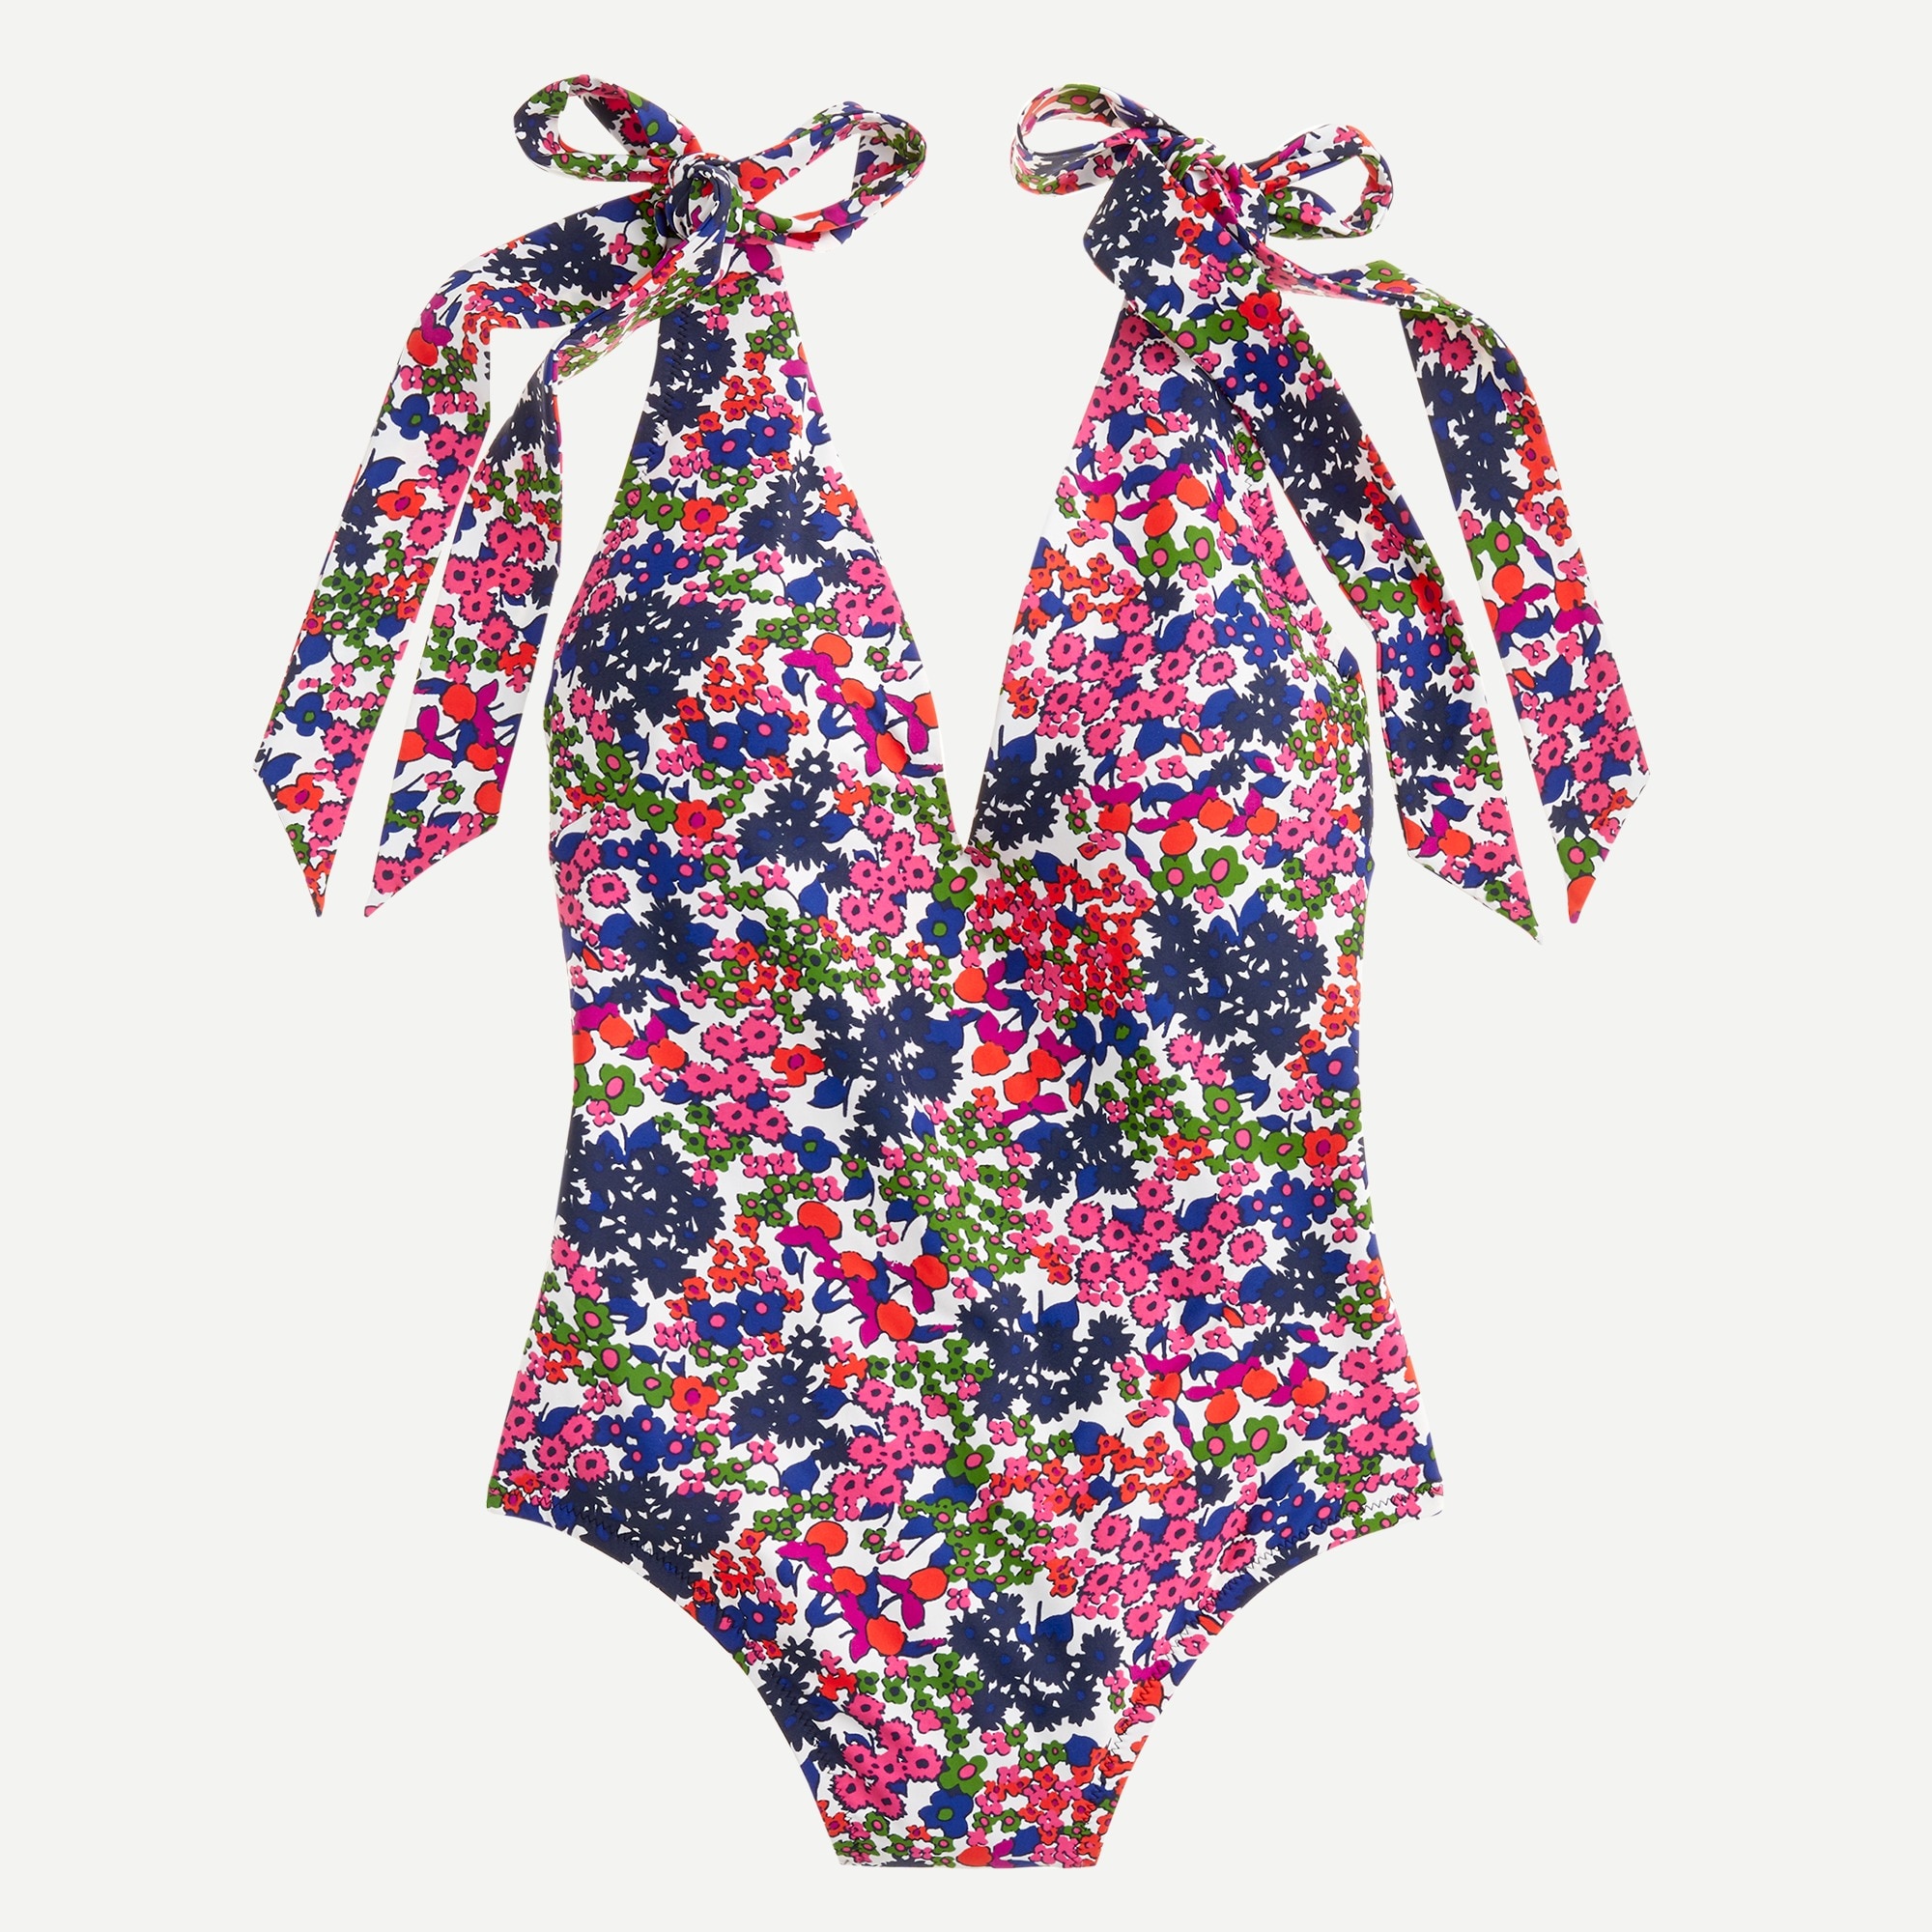 Glbebimd Floral Swimsuits for Women, Reversible Tie Shoulder